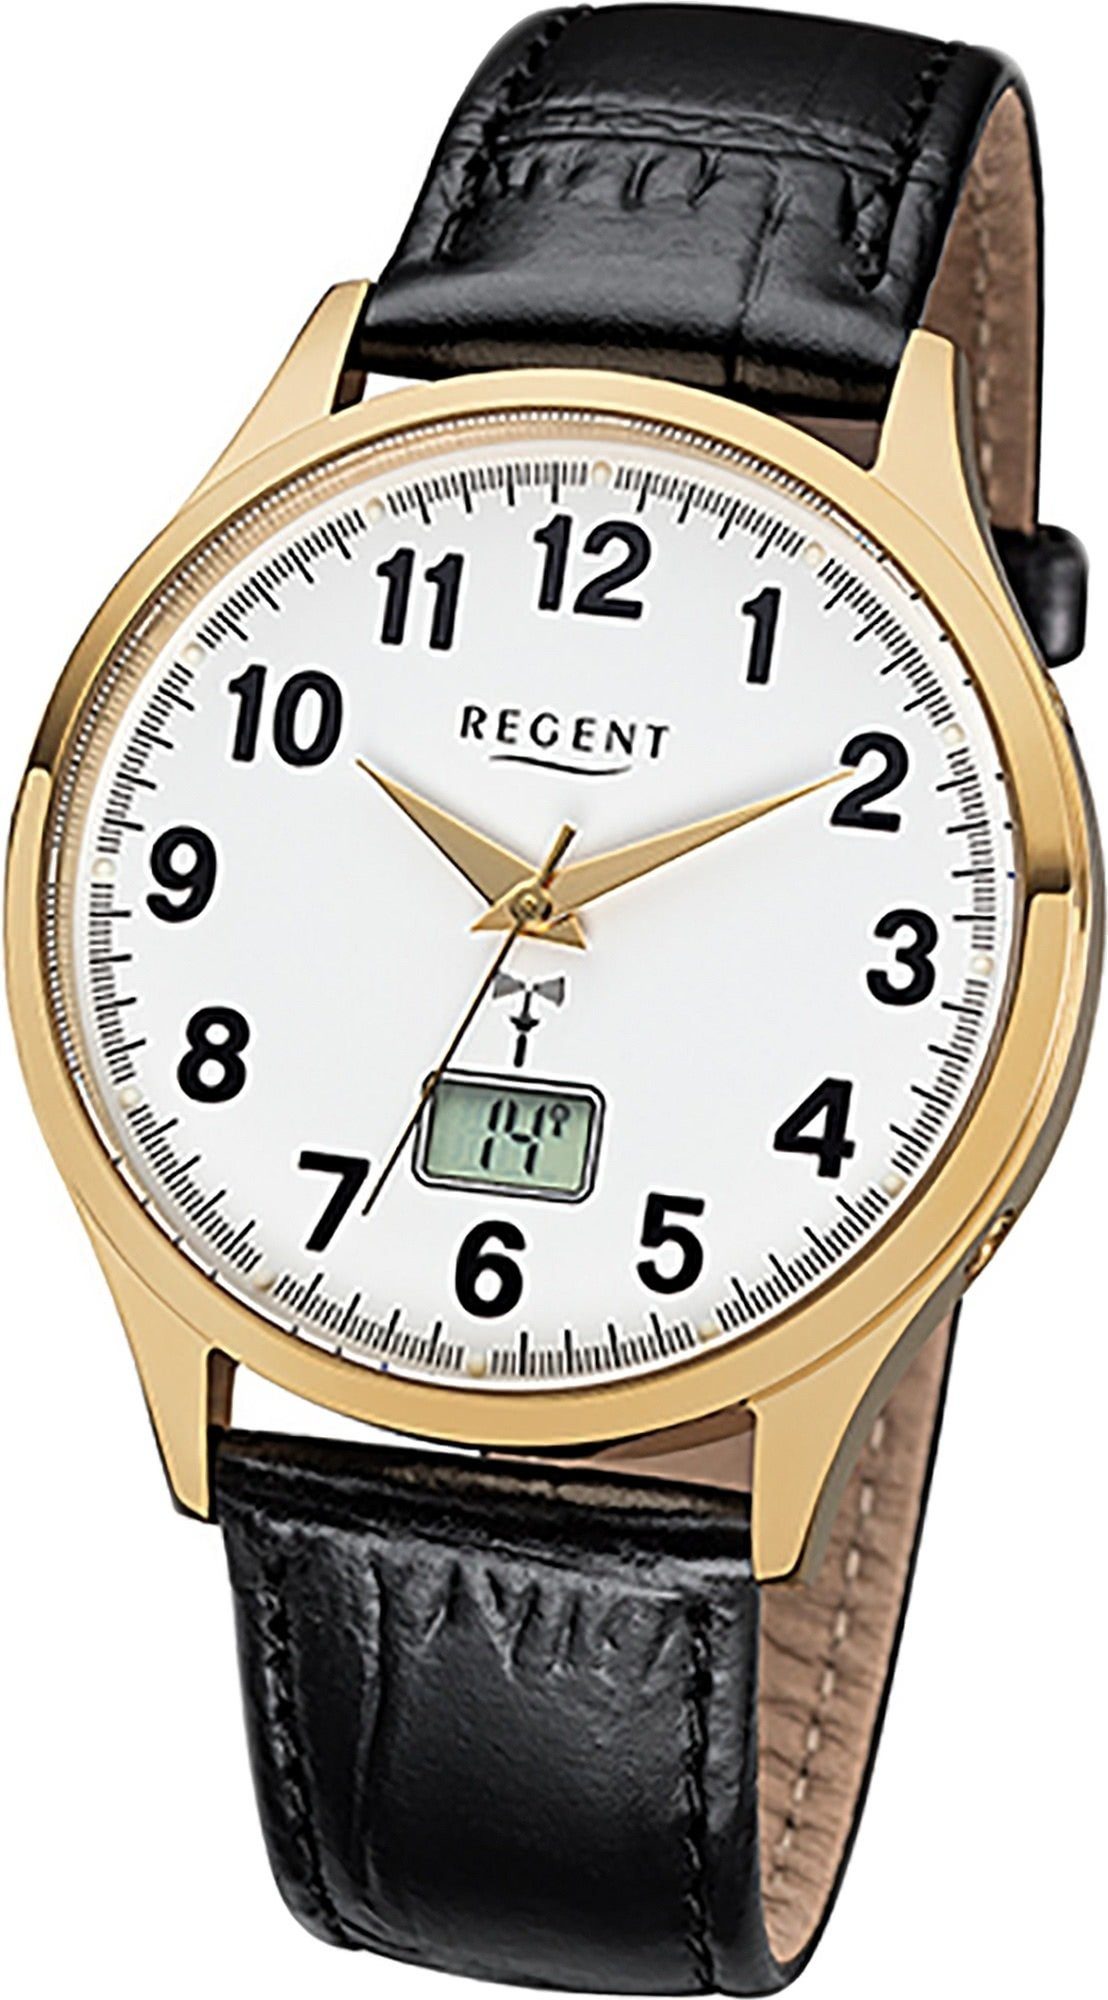 (ca. 40mm), Leder Lederarmband, Herrenuhr Elegant-Style mit Uhr Gehäuse, Regent Regent Funkuhr, Herren FR-229 rundes Funkuhr